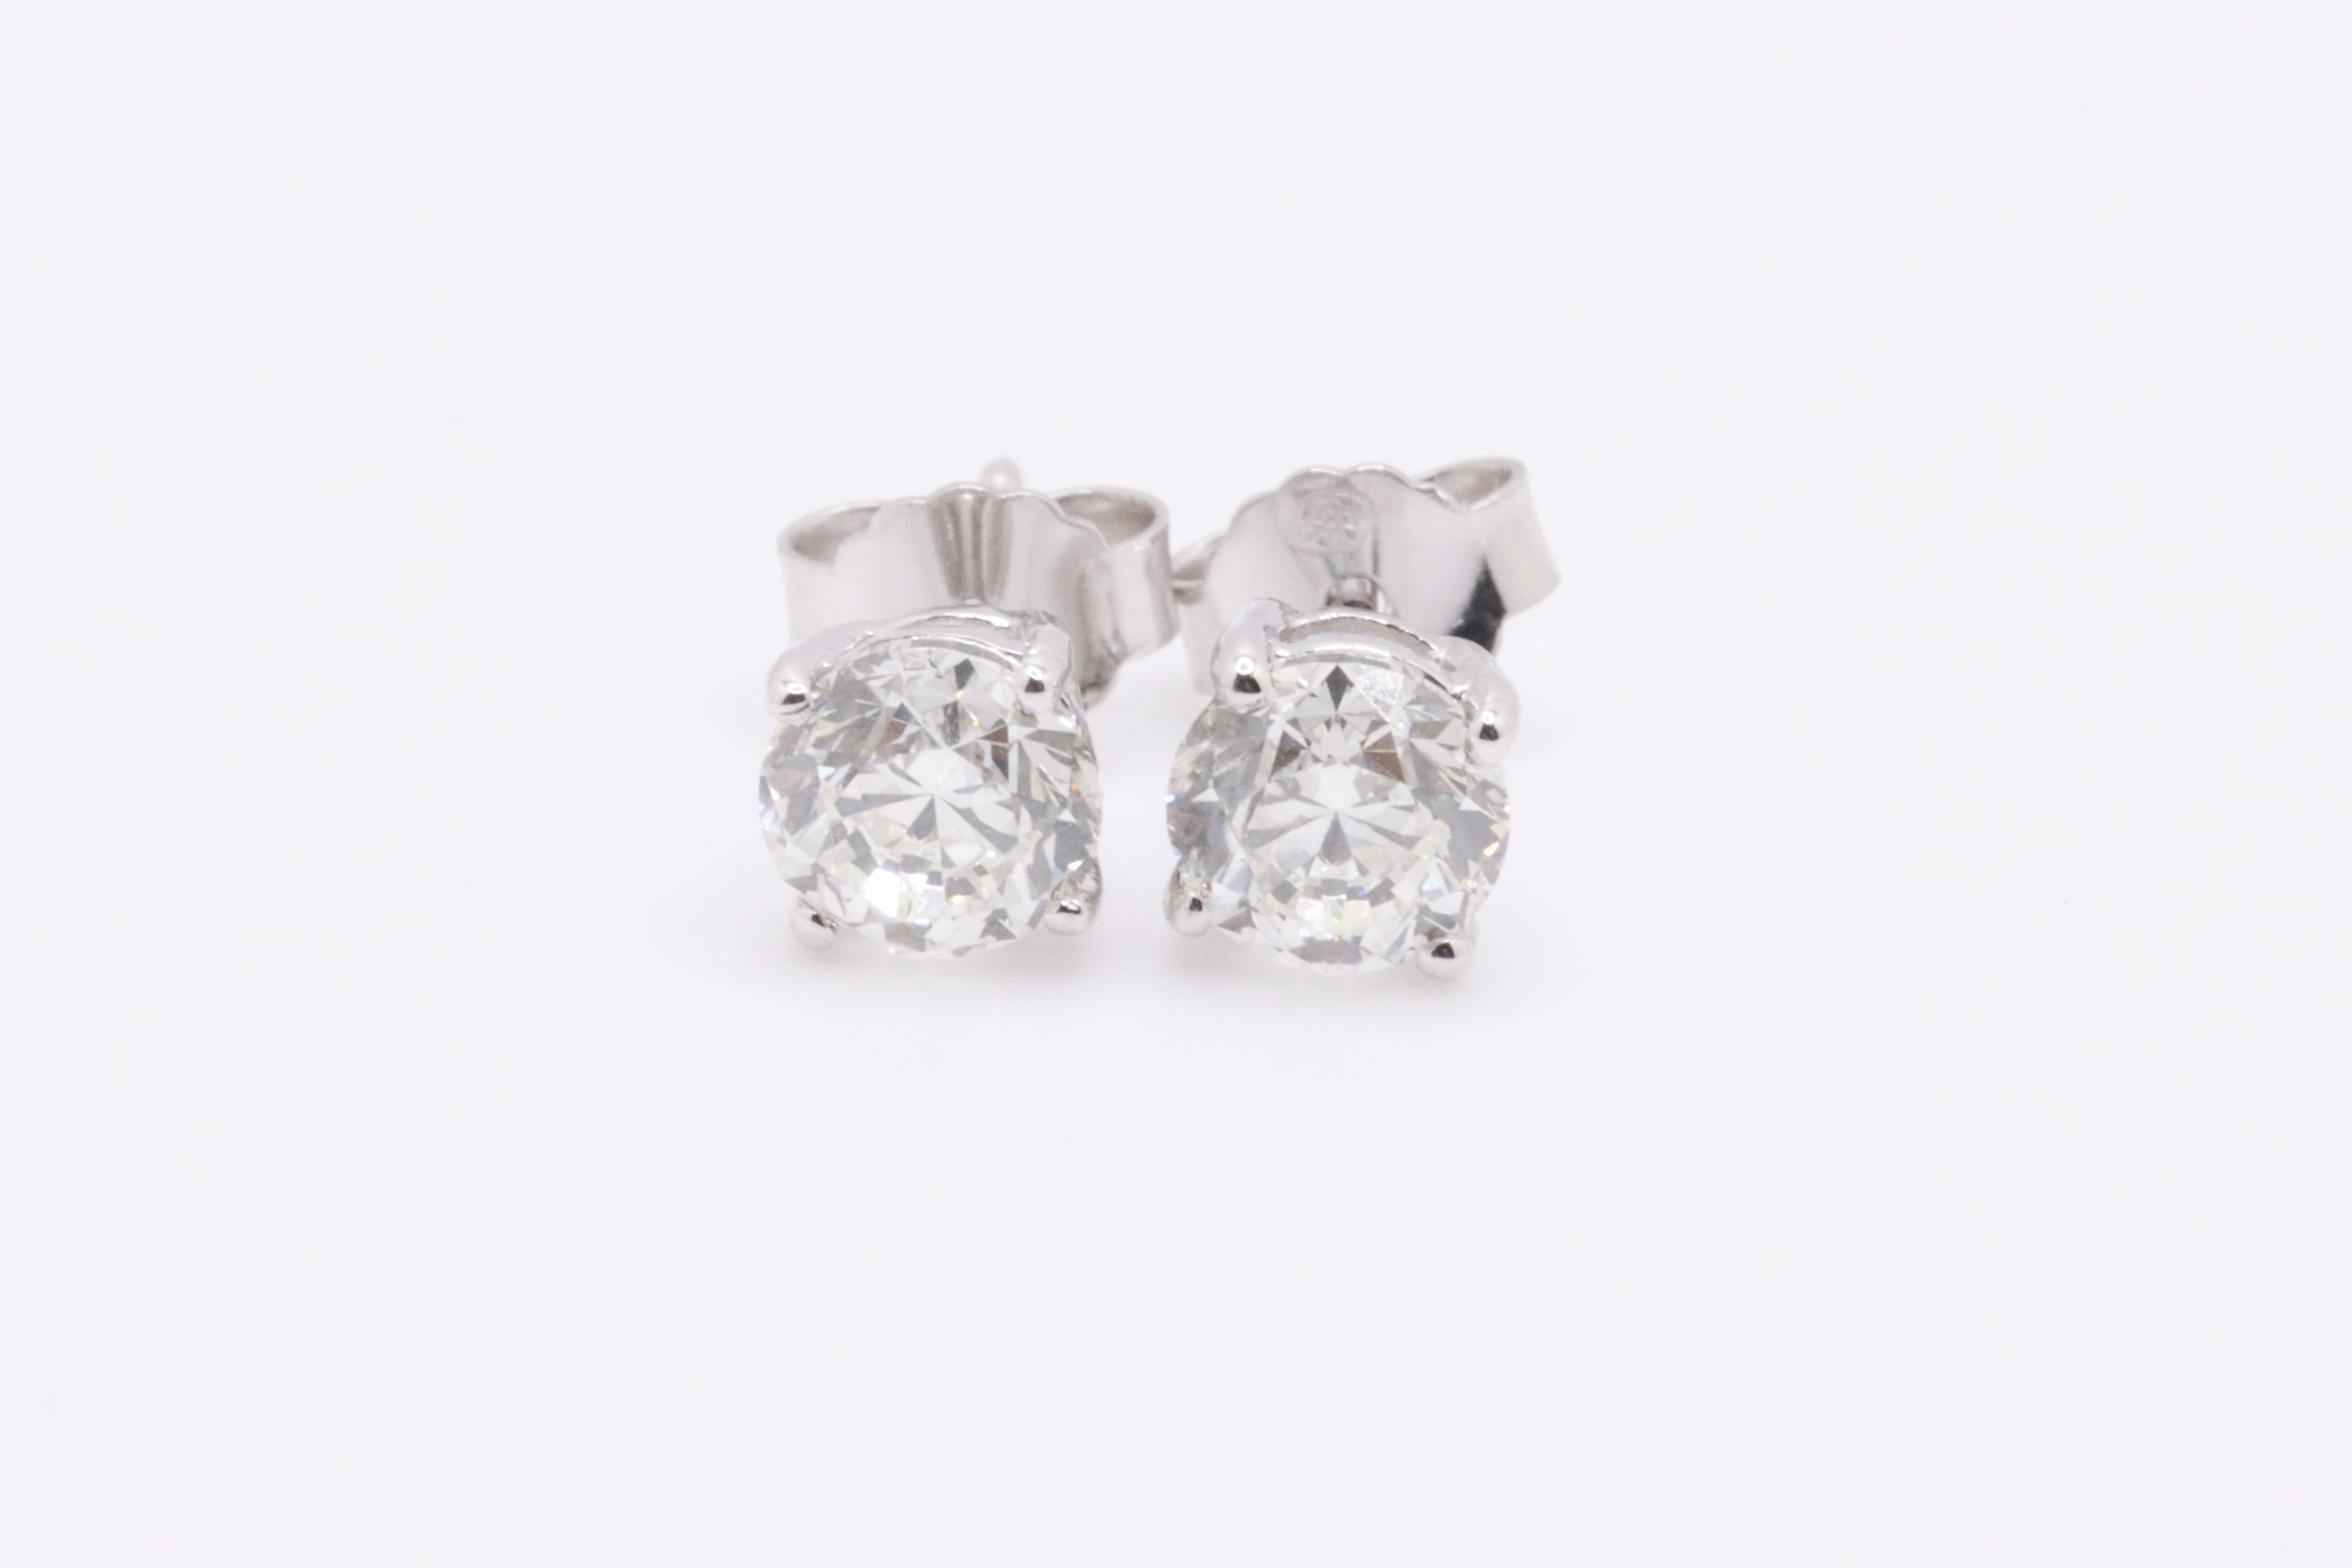 ** ON SALE ** Round Brilliant Cut 1.00 Carat Diamond 18kt White Gold Earrings- F Colour VS Clarity